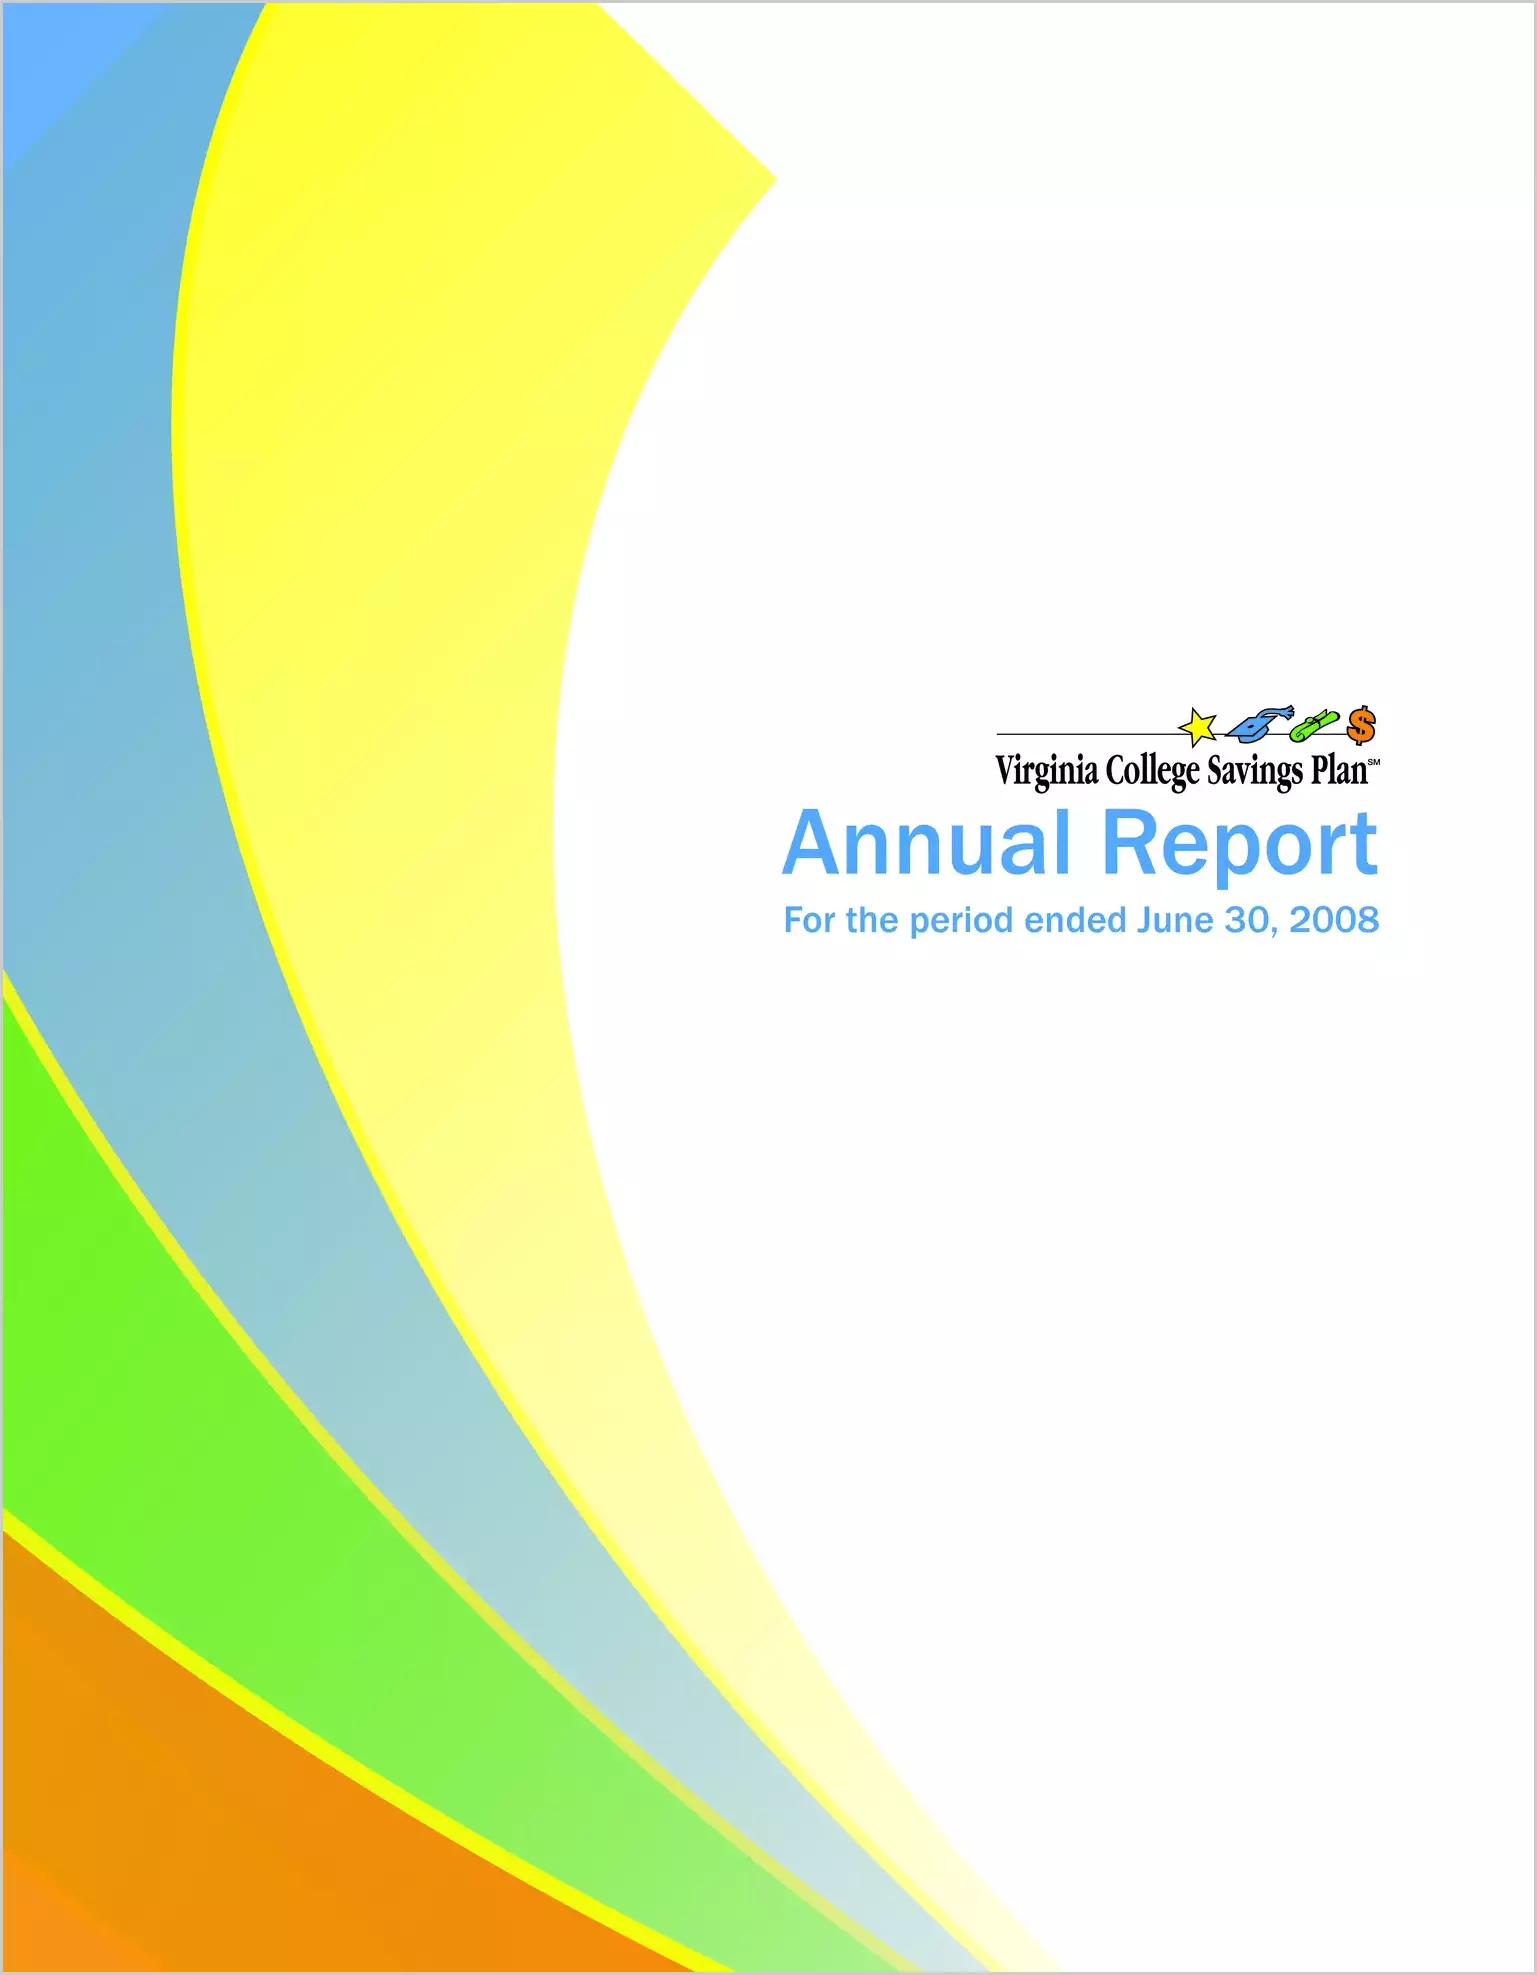 Virginia College Savings Plan Annual Report 2008